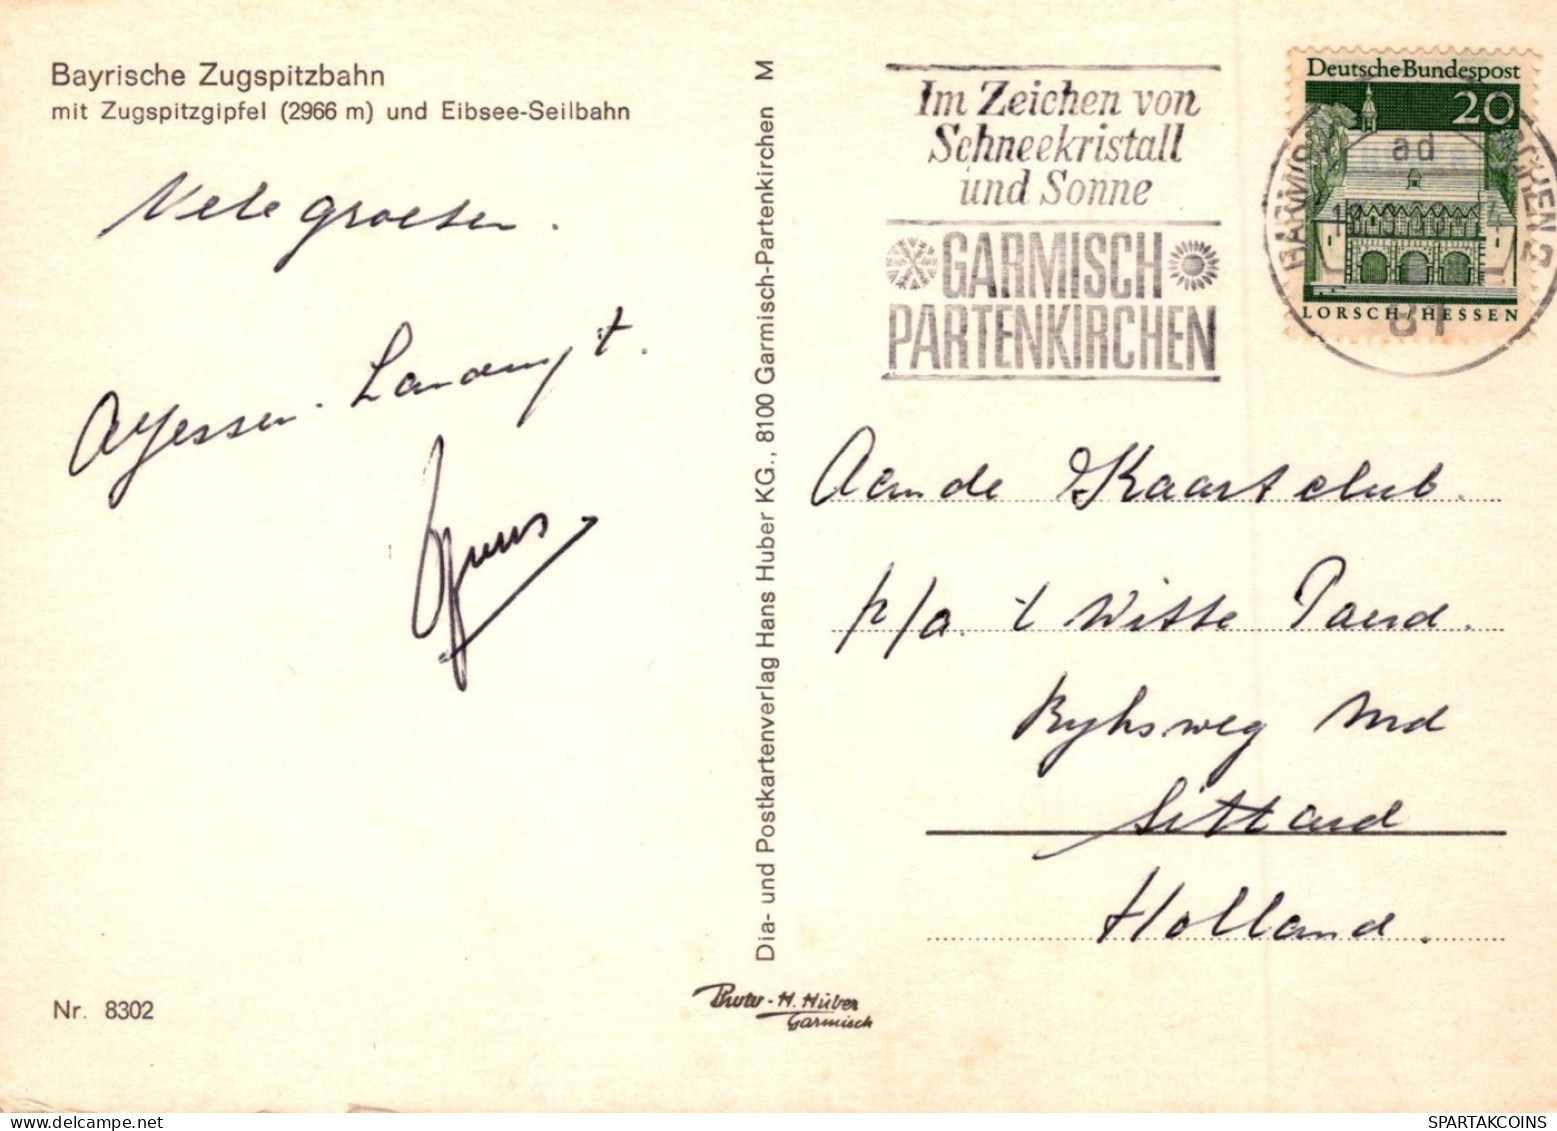 TREN TRANSPORTE Ferroviario Vintage Tarjeta Postal CPSM #PAA668.A - Eisenbahnen